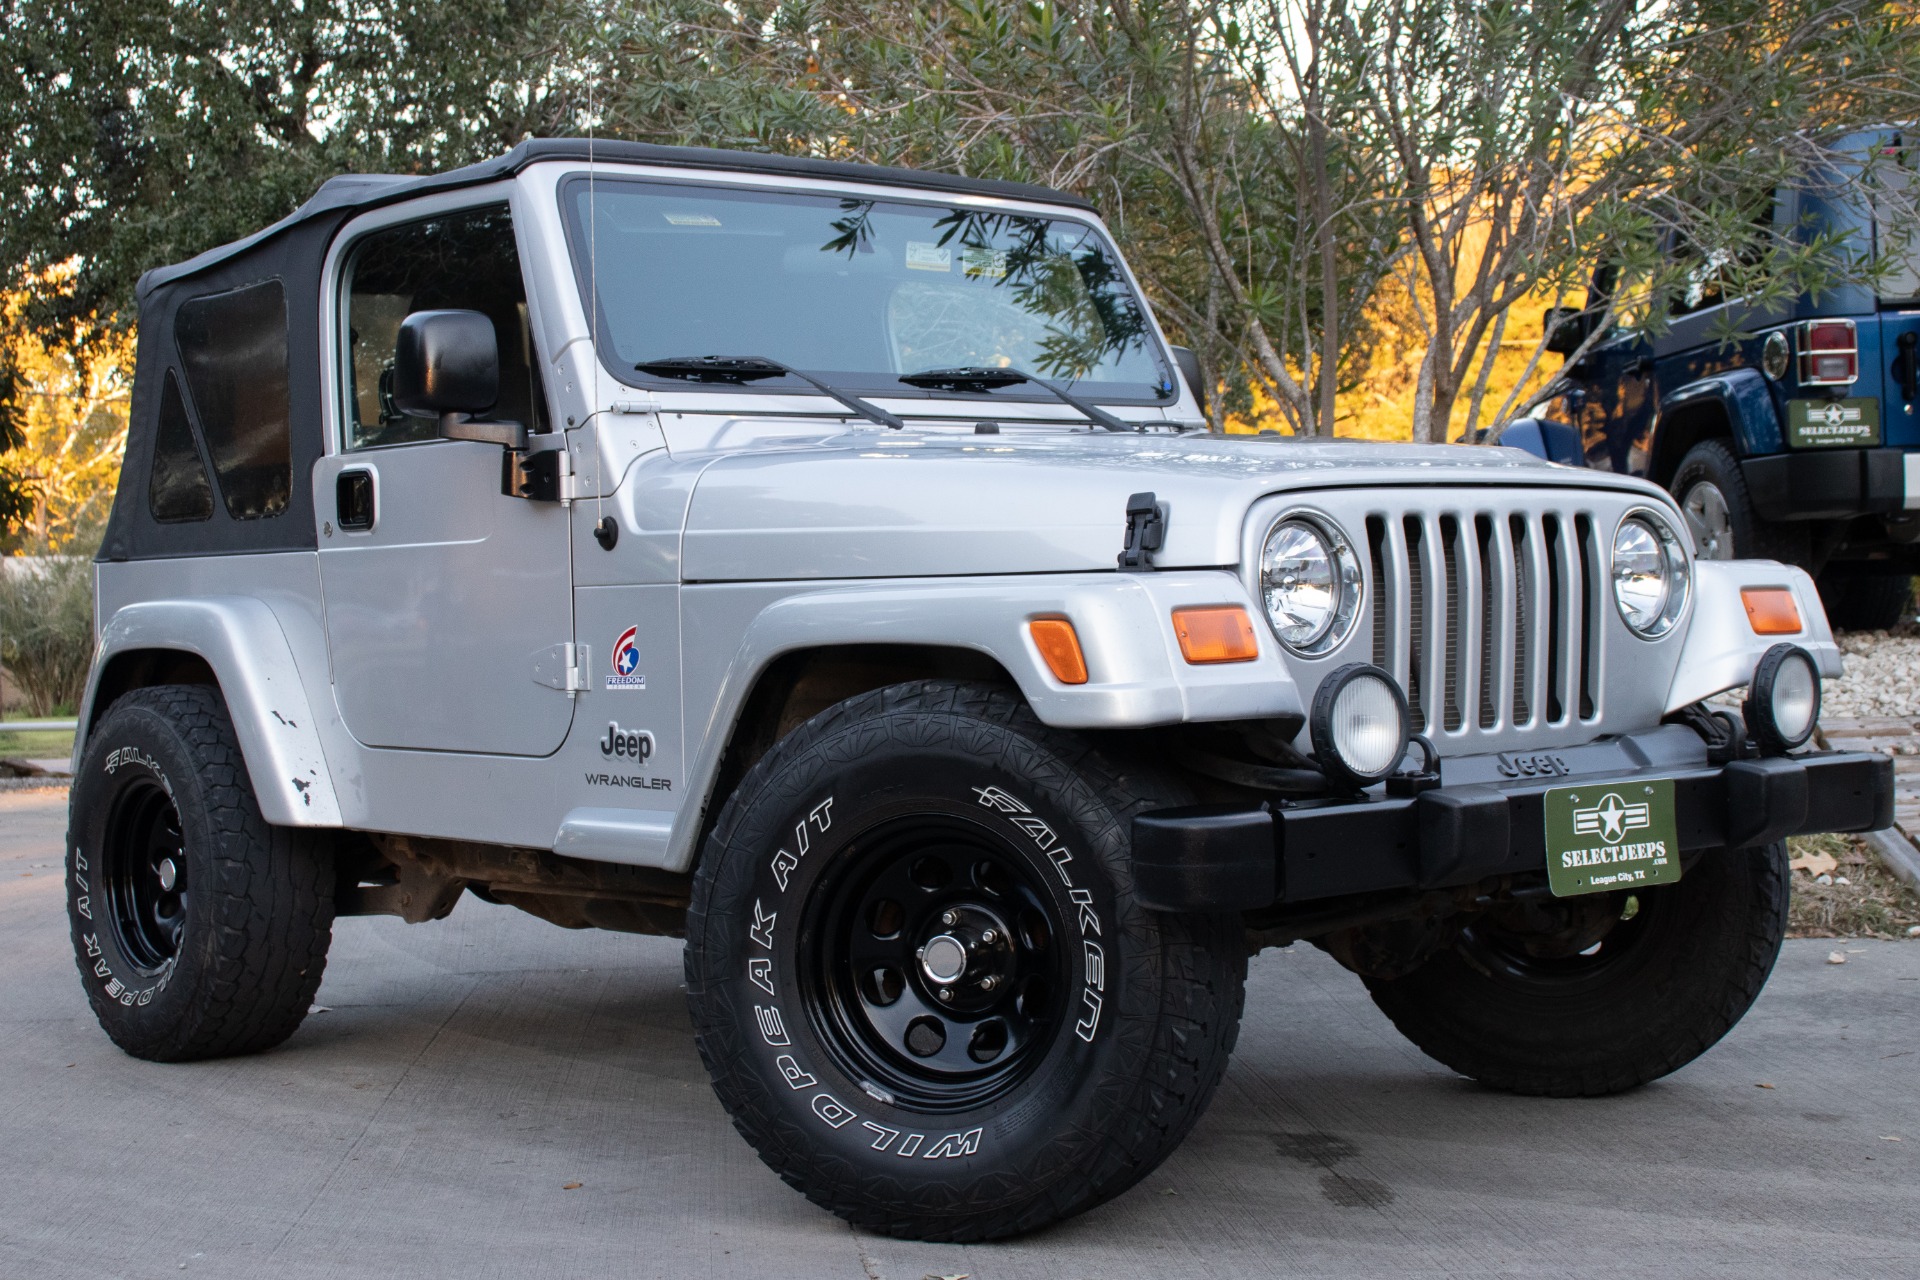 Used-2003-Jeep-Wrangler-Freedom-Edition